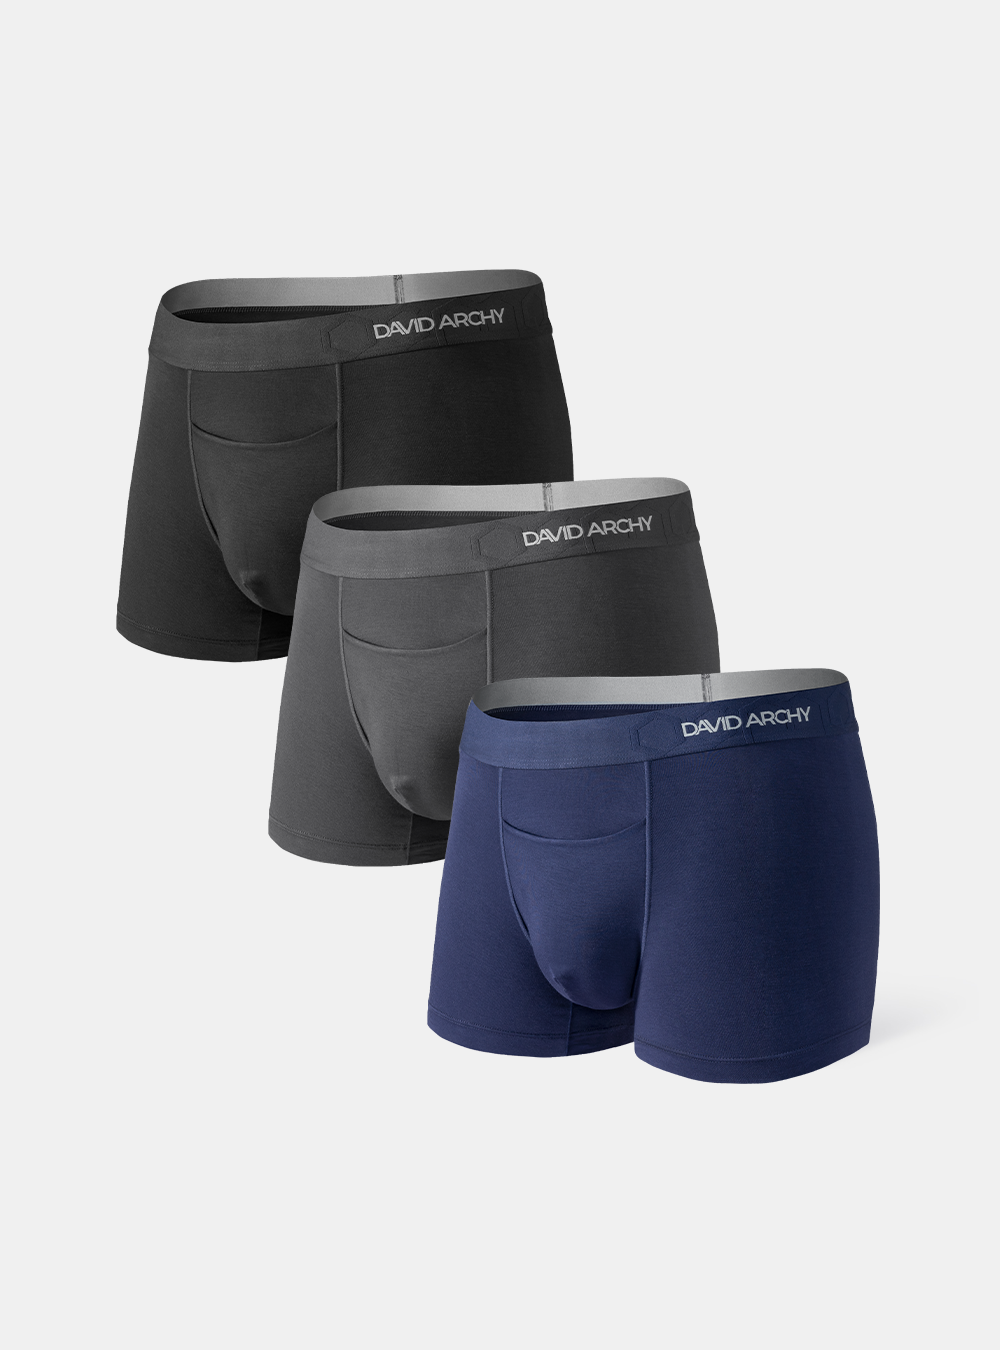 DAVID ARCHY Mens Modal Briefs Underwear Stretch Super Soft